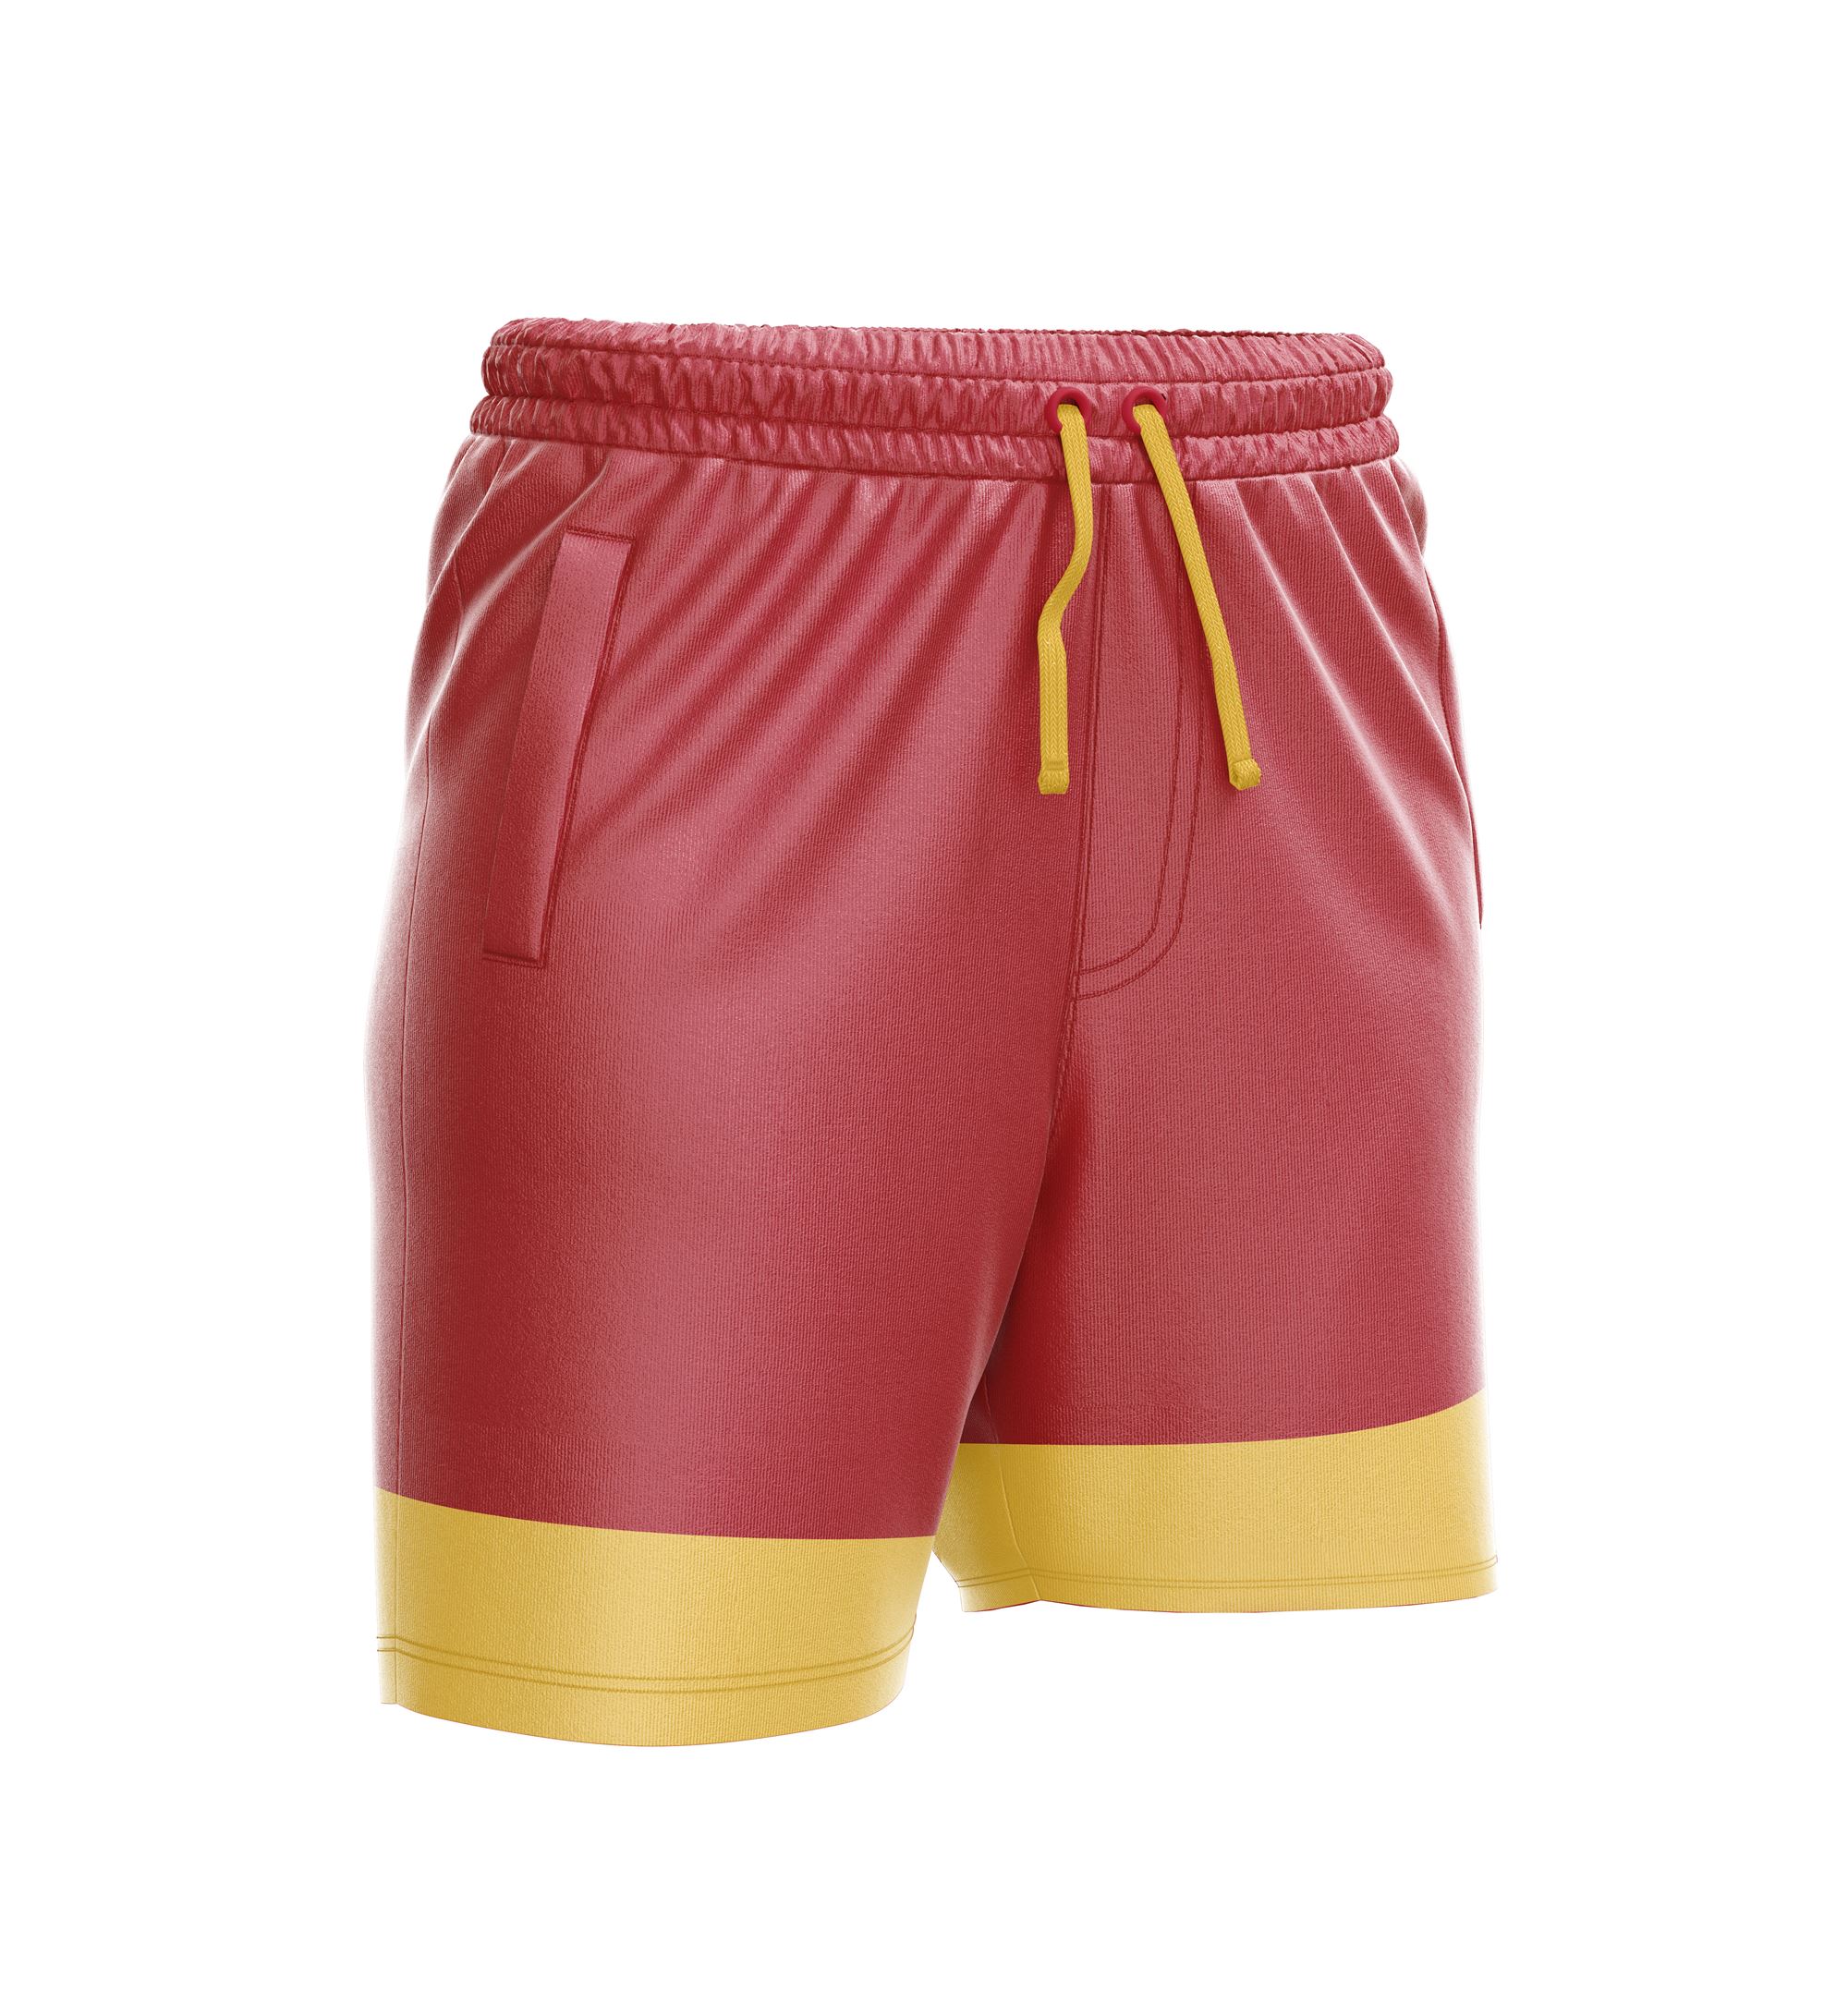 Soccer Shorts - Varsity Pattern - Reversible/single ply